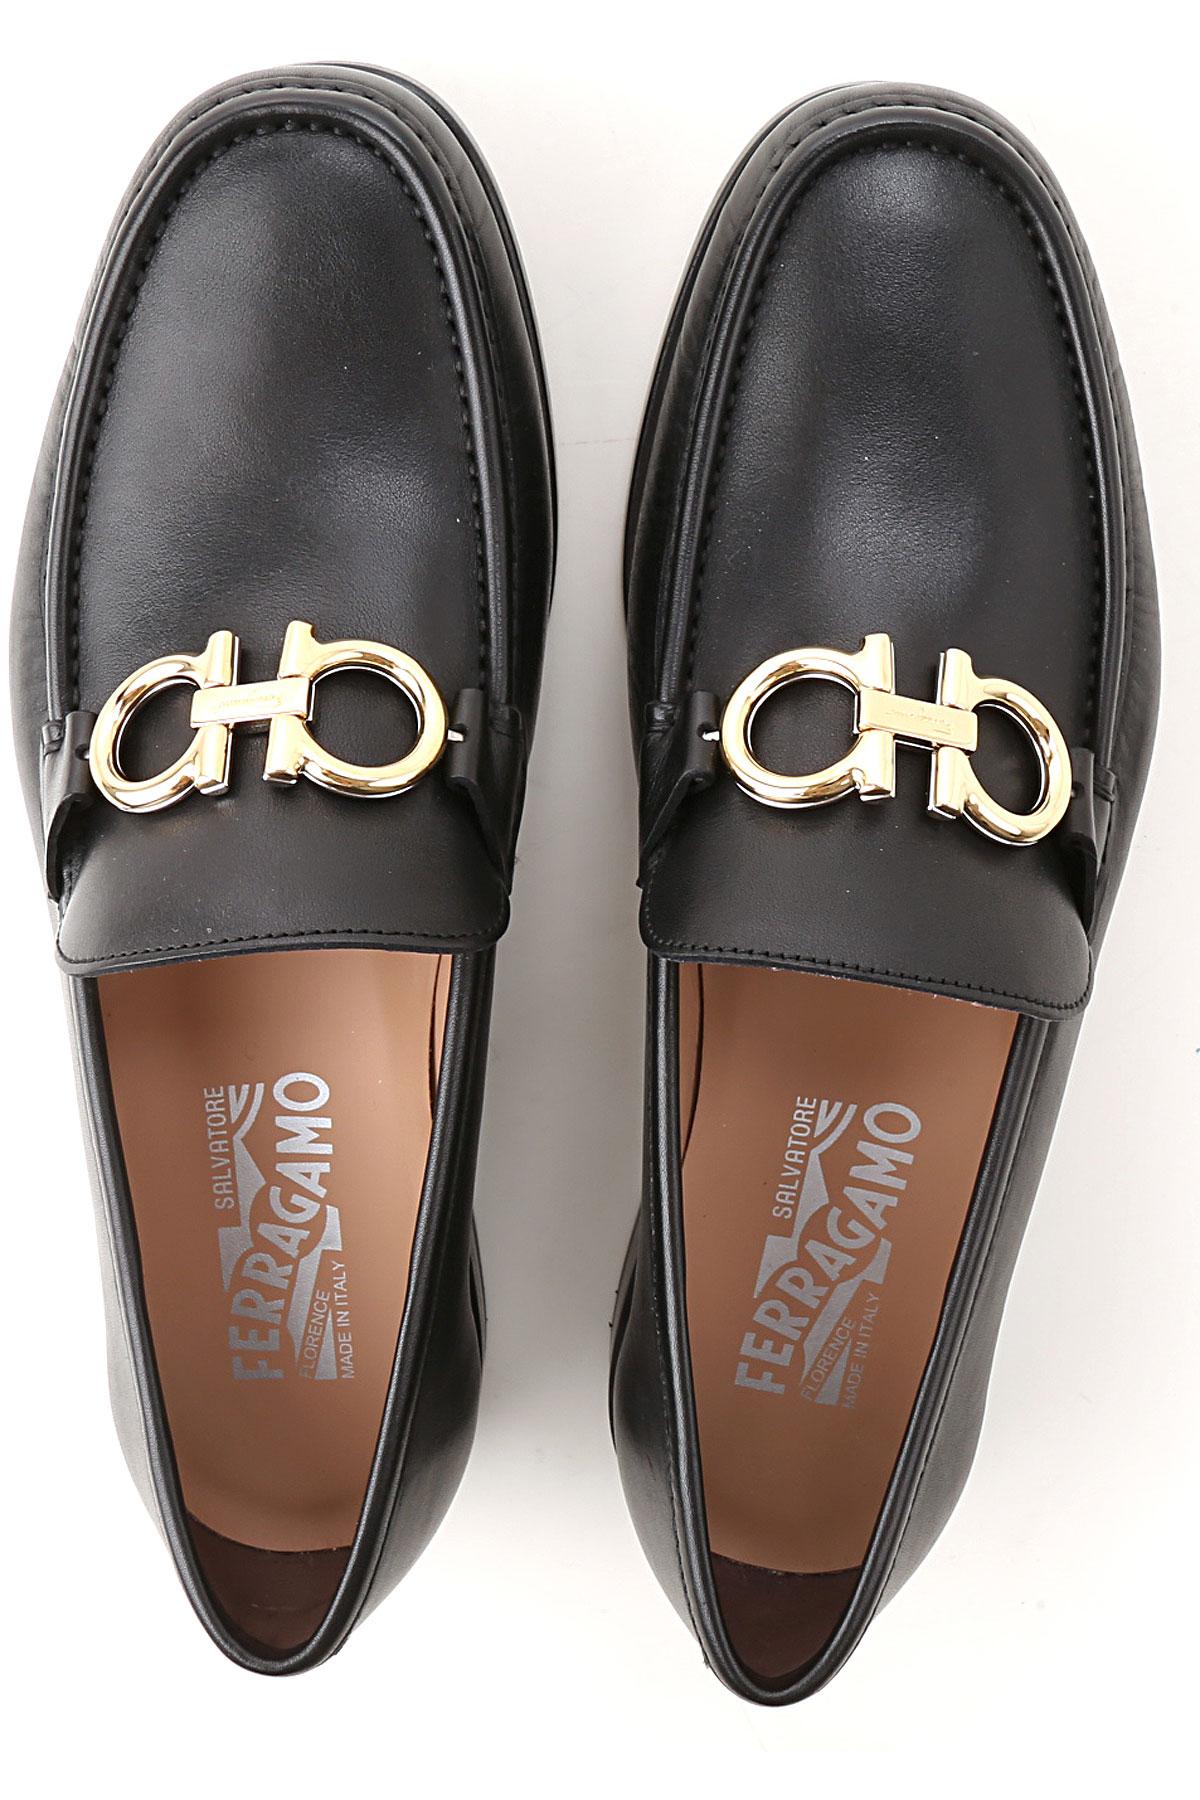 Ferragamo Loafers For Men On Sale in Black for Men - Lyst